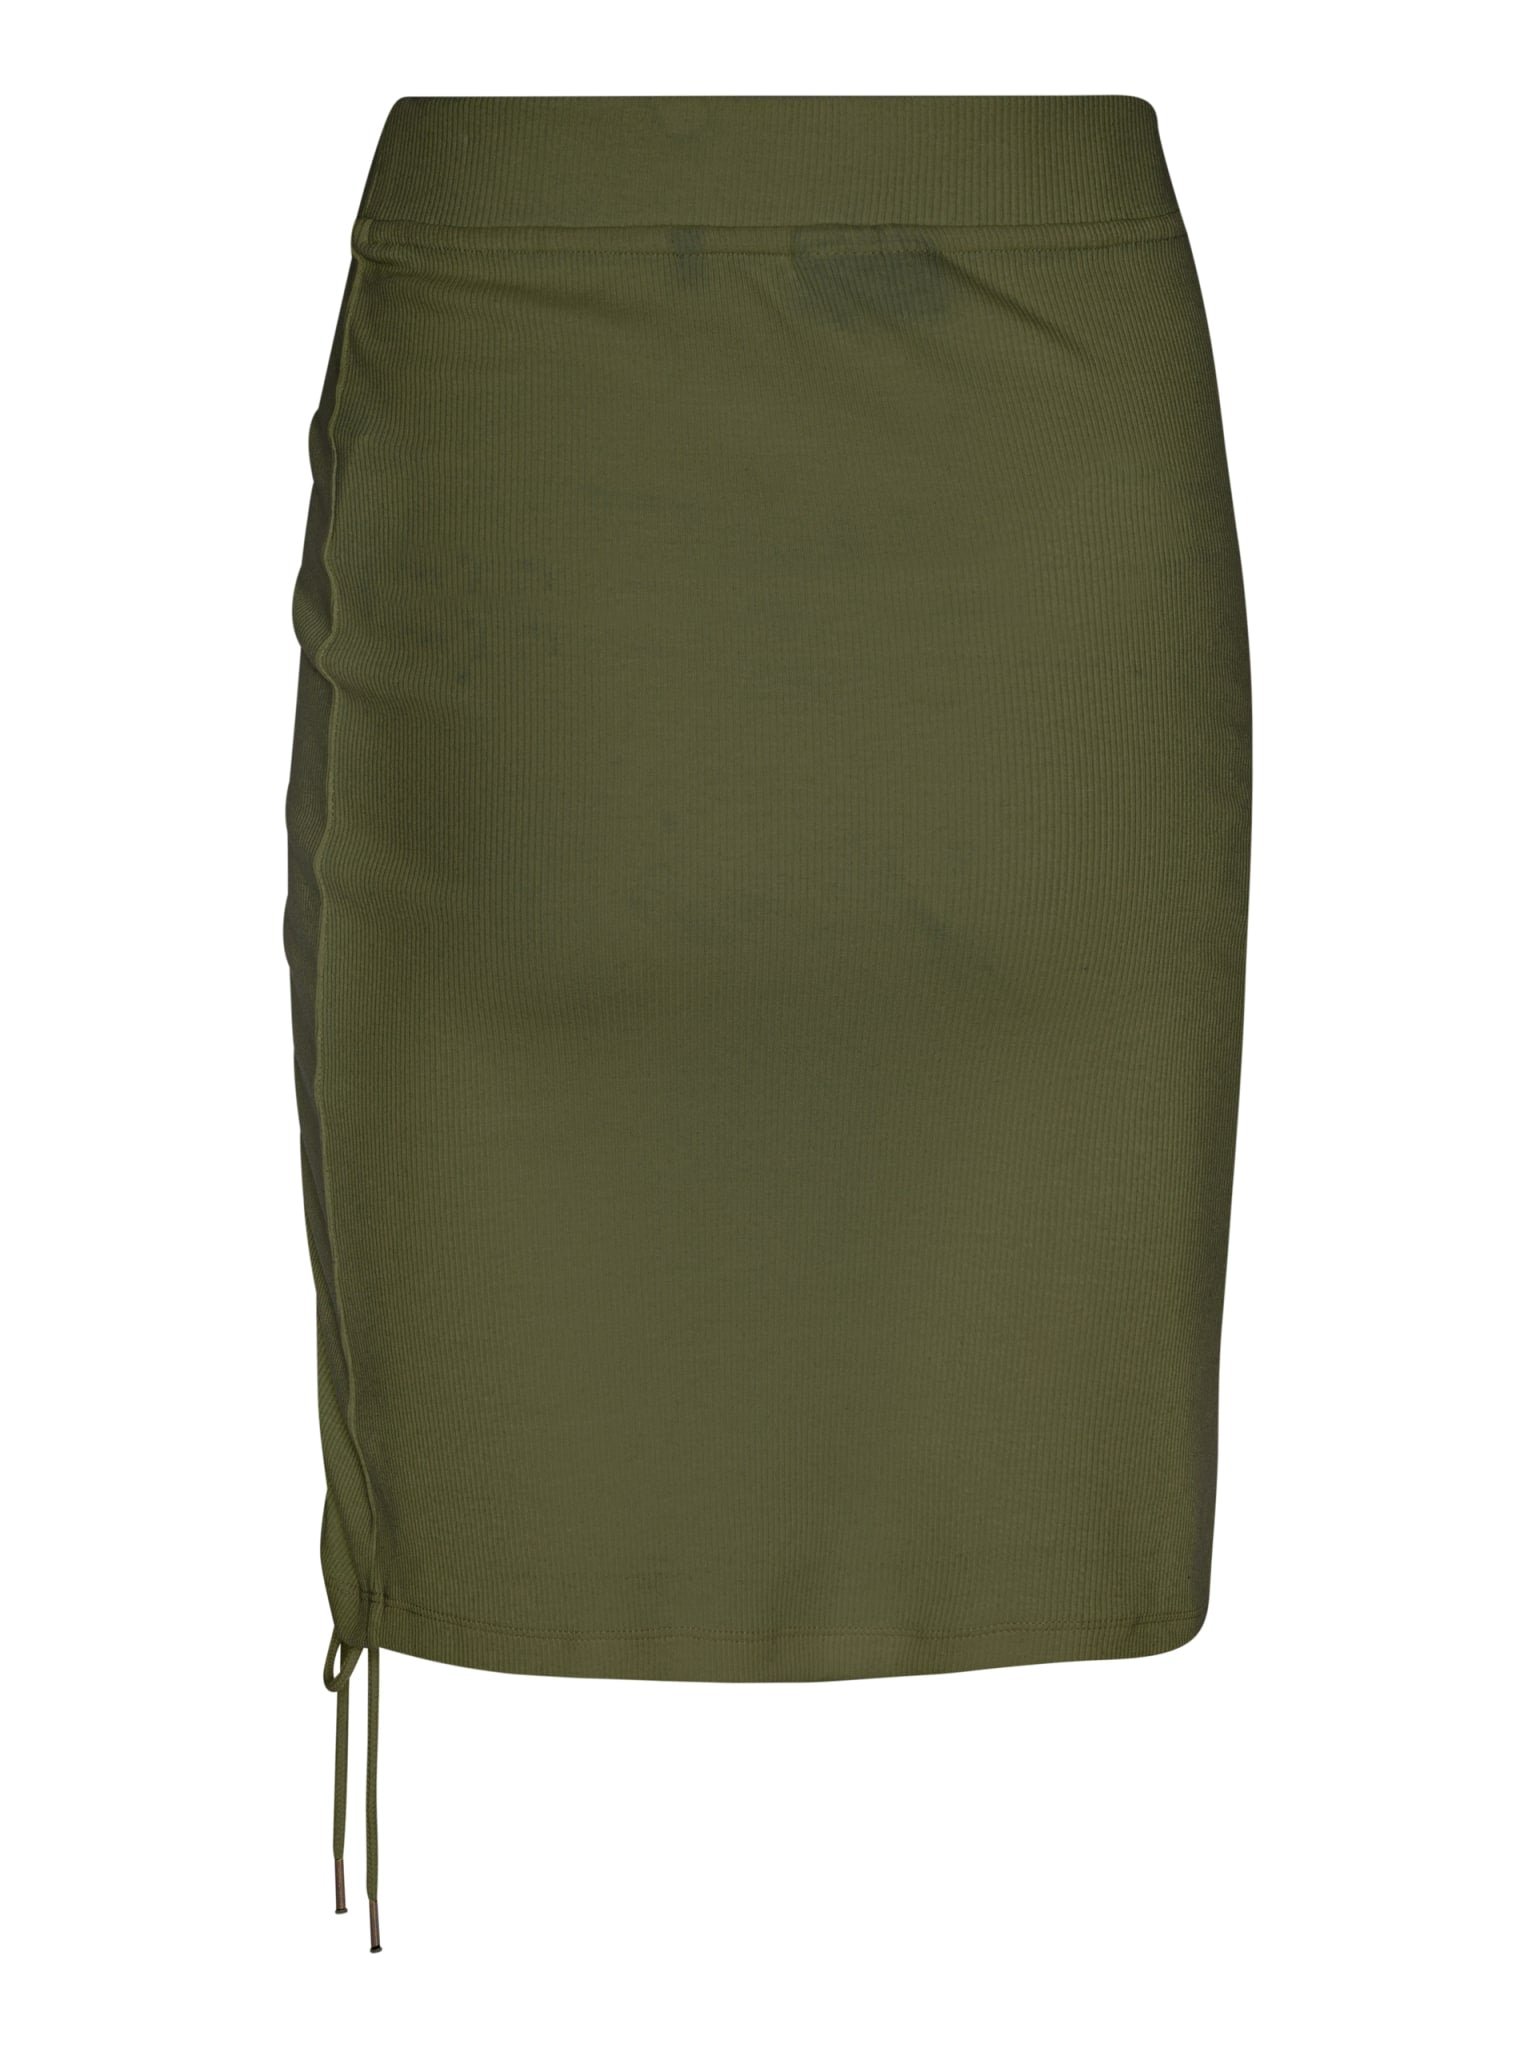 Crest ribbed adjustable OCN Weed® skirt - Army